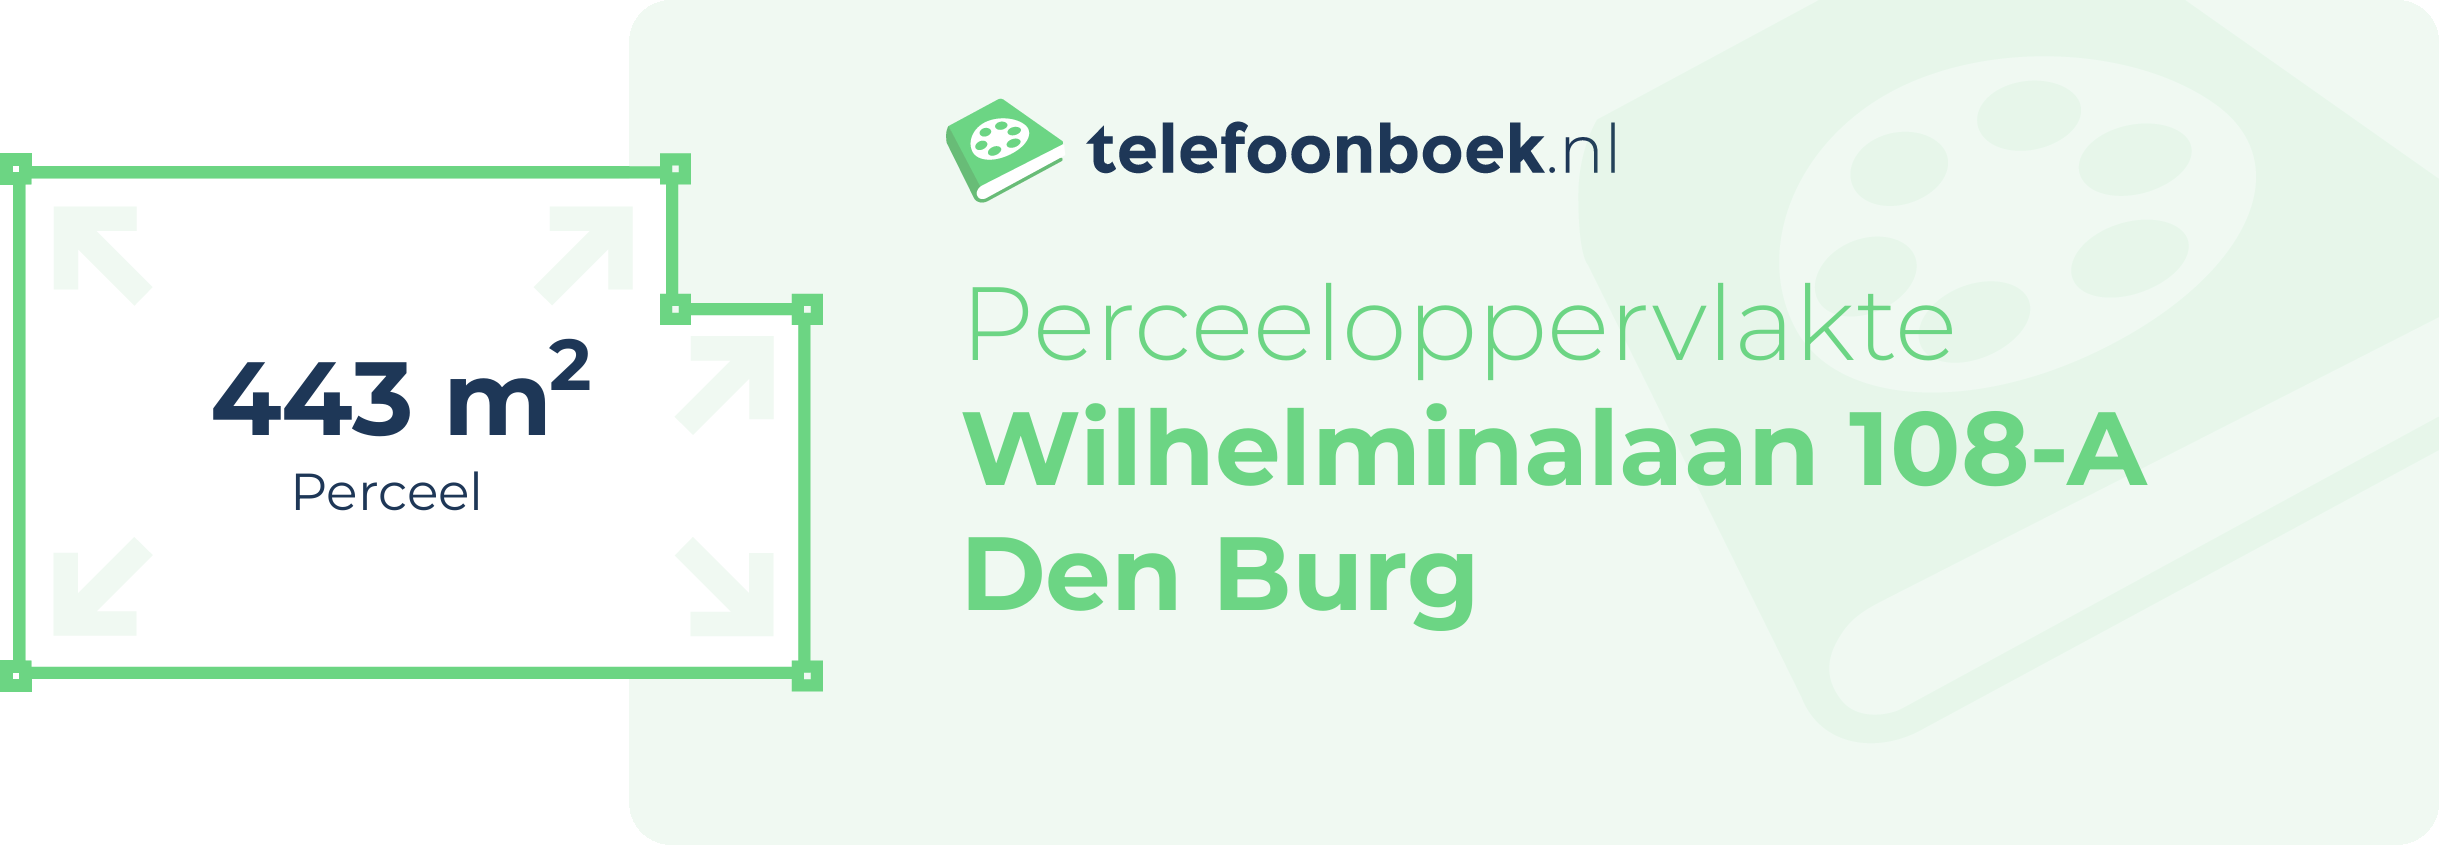 Perceeloppervlakte Wilhelminalaan 108-A Den Burg